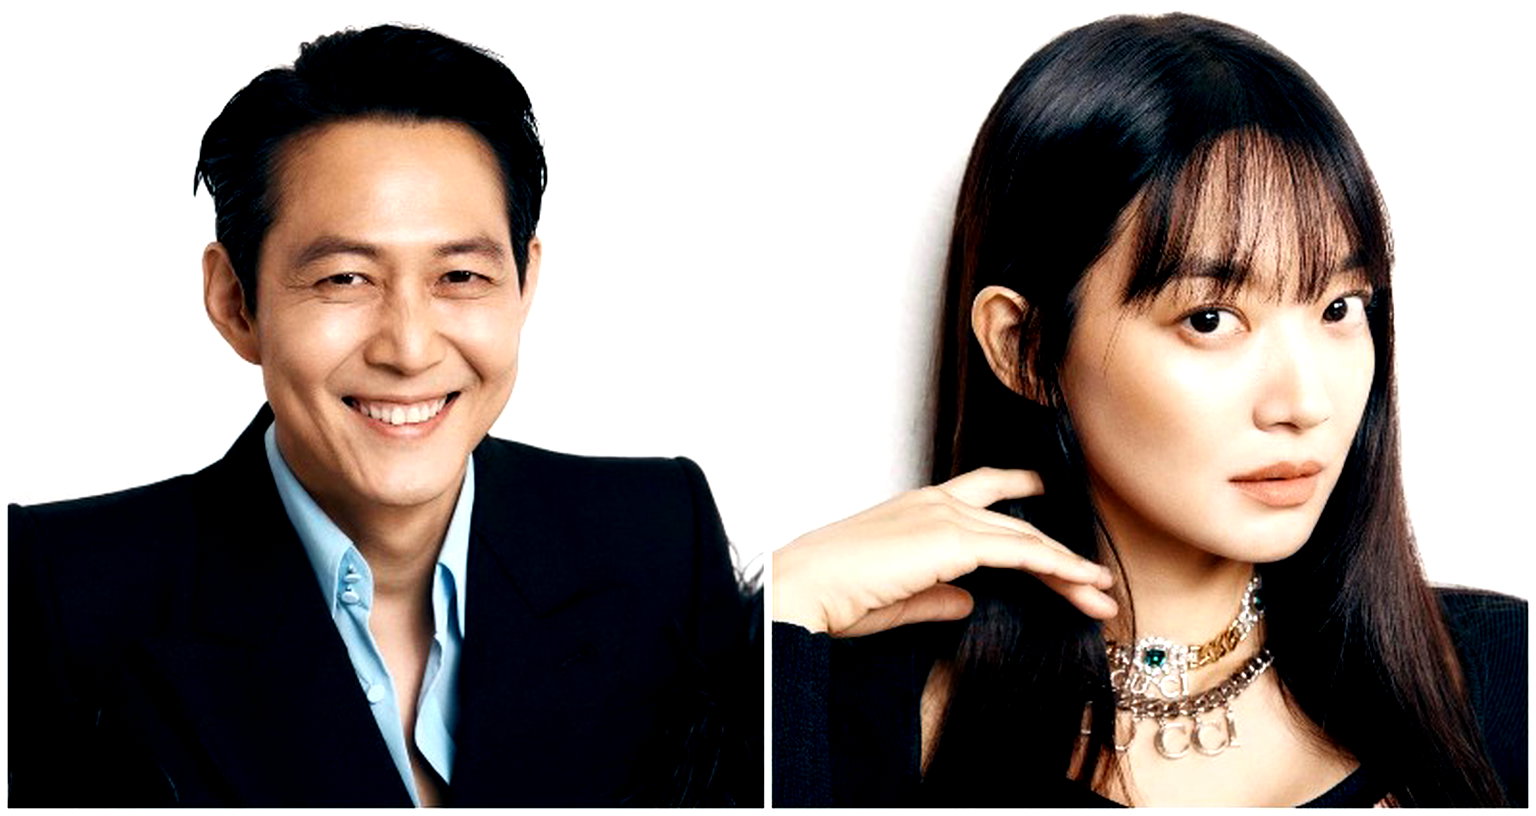 Lee Jung-jae of 'Squid Game' and Shin Min-ah of 'Hometown Cha-Cha